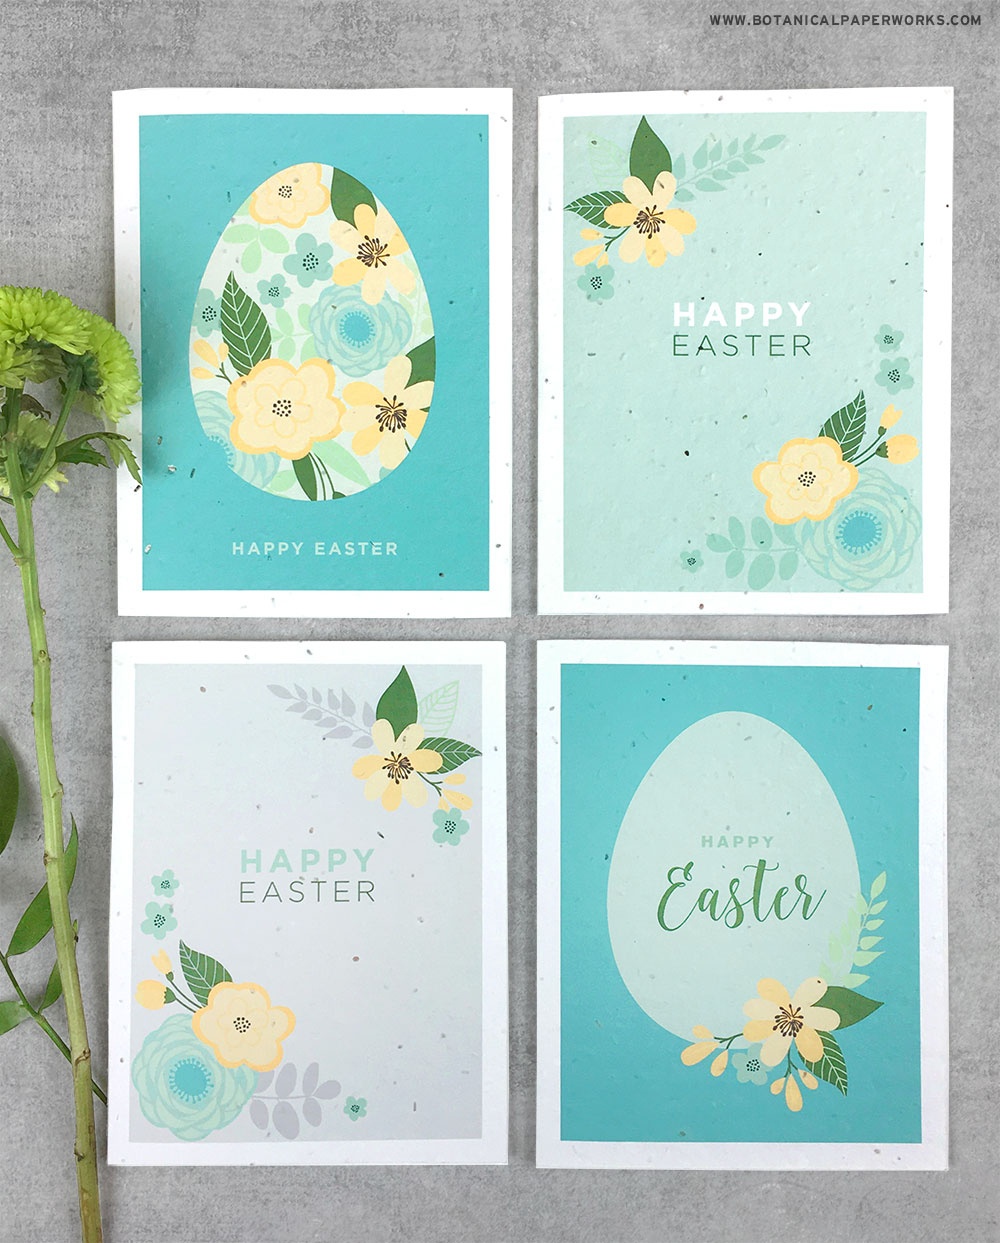 Free Printable} Easter Cards | Blog | Botanical Paperworks - Free Printable Easter Cards To Print